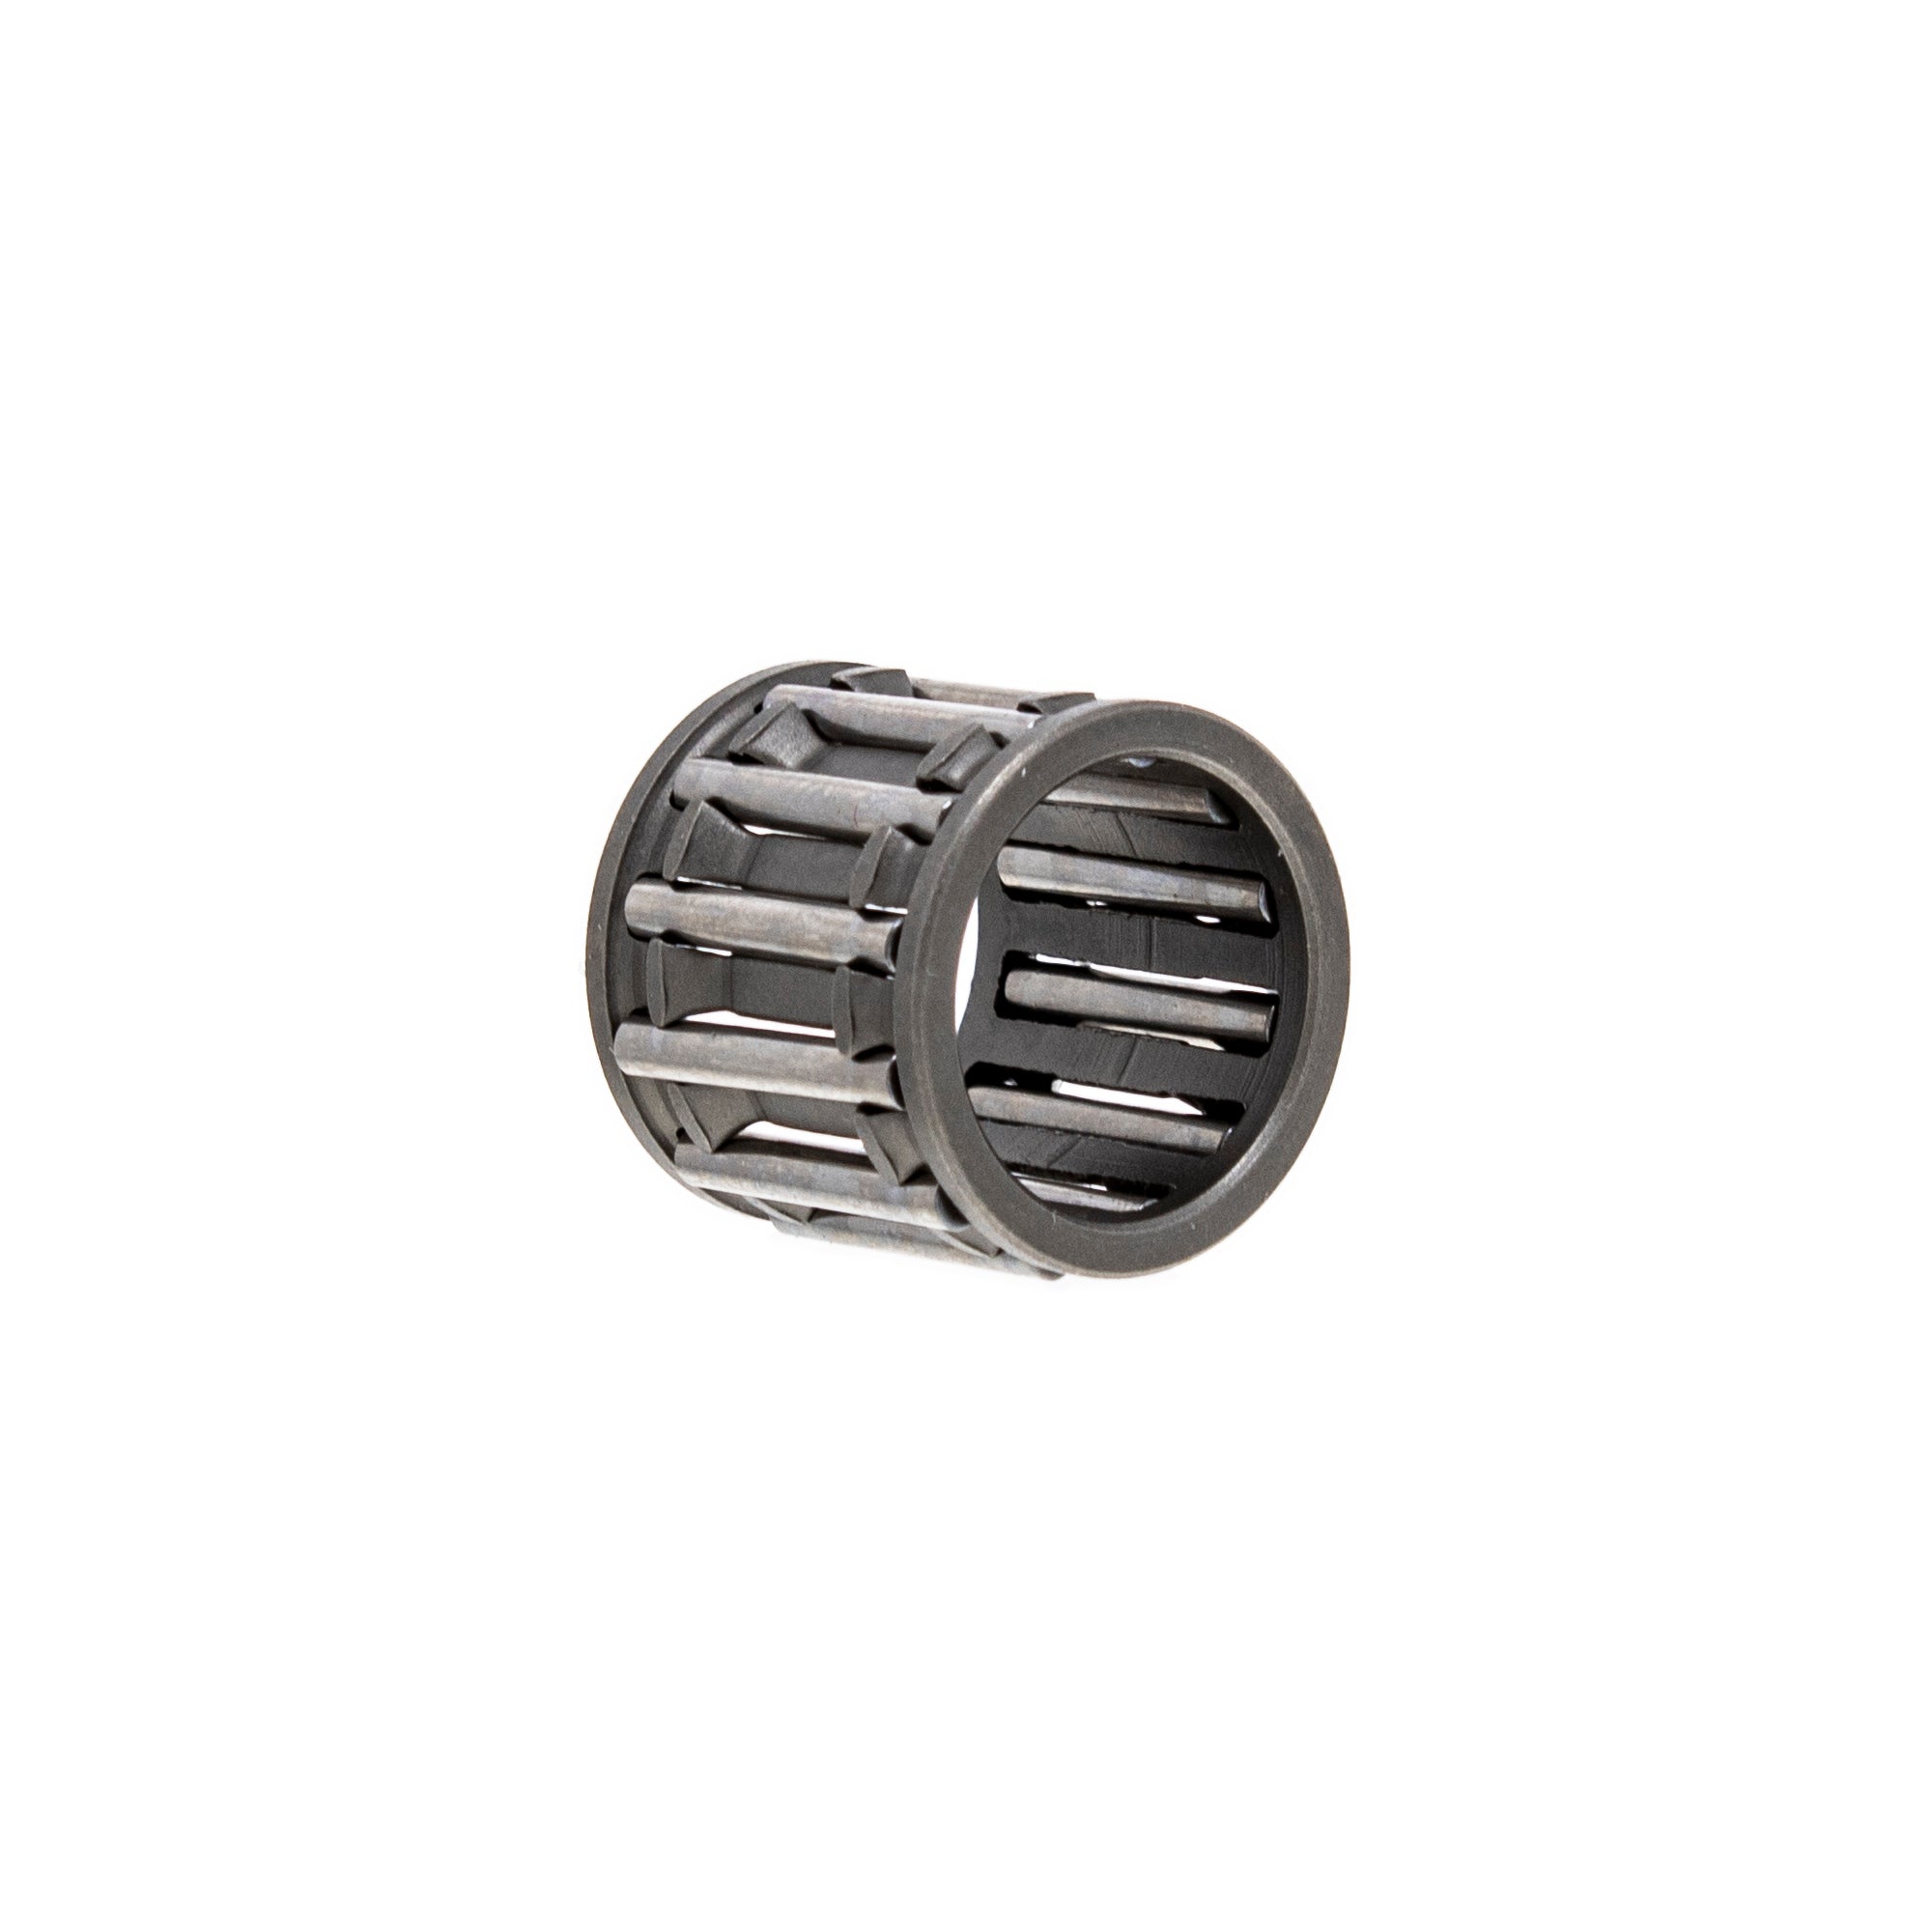 Piston Wristpin Piston Ring Circlips Kit For Yamaha 5PA-11631-10-D0 5PA-11631-10-C0 5PA-11631-10-B0